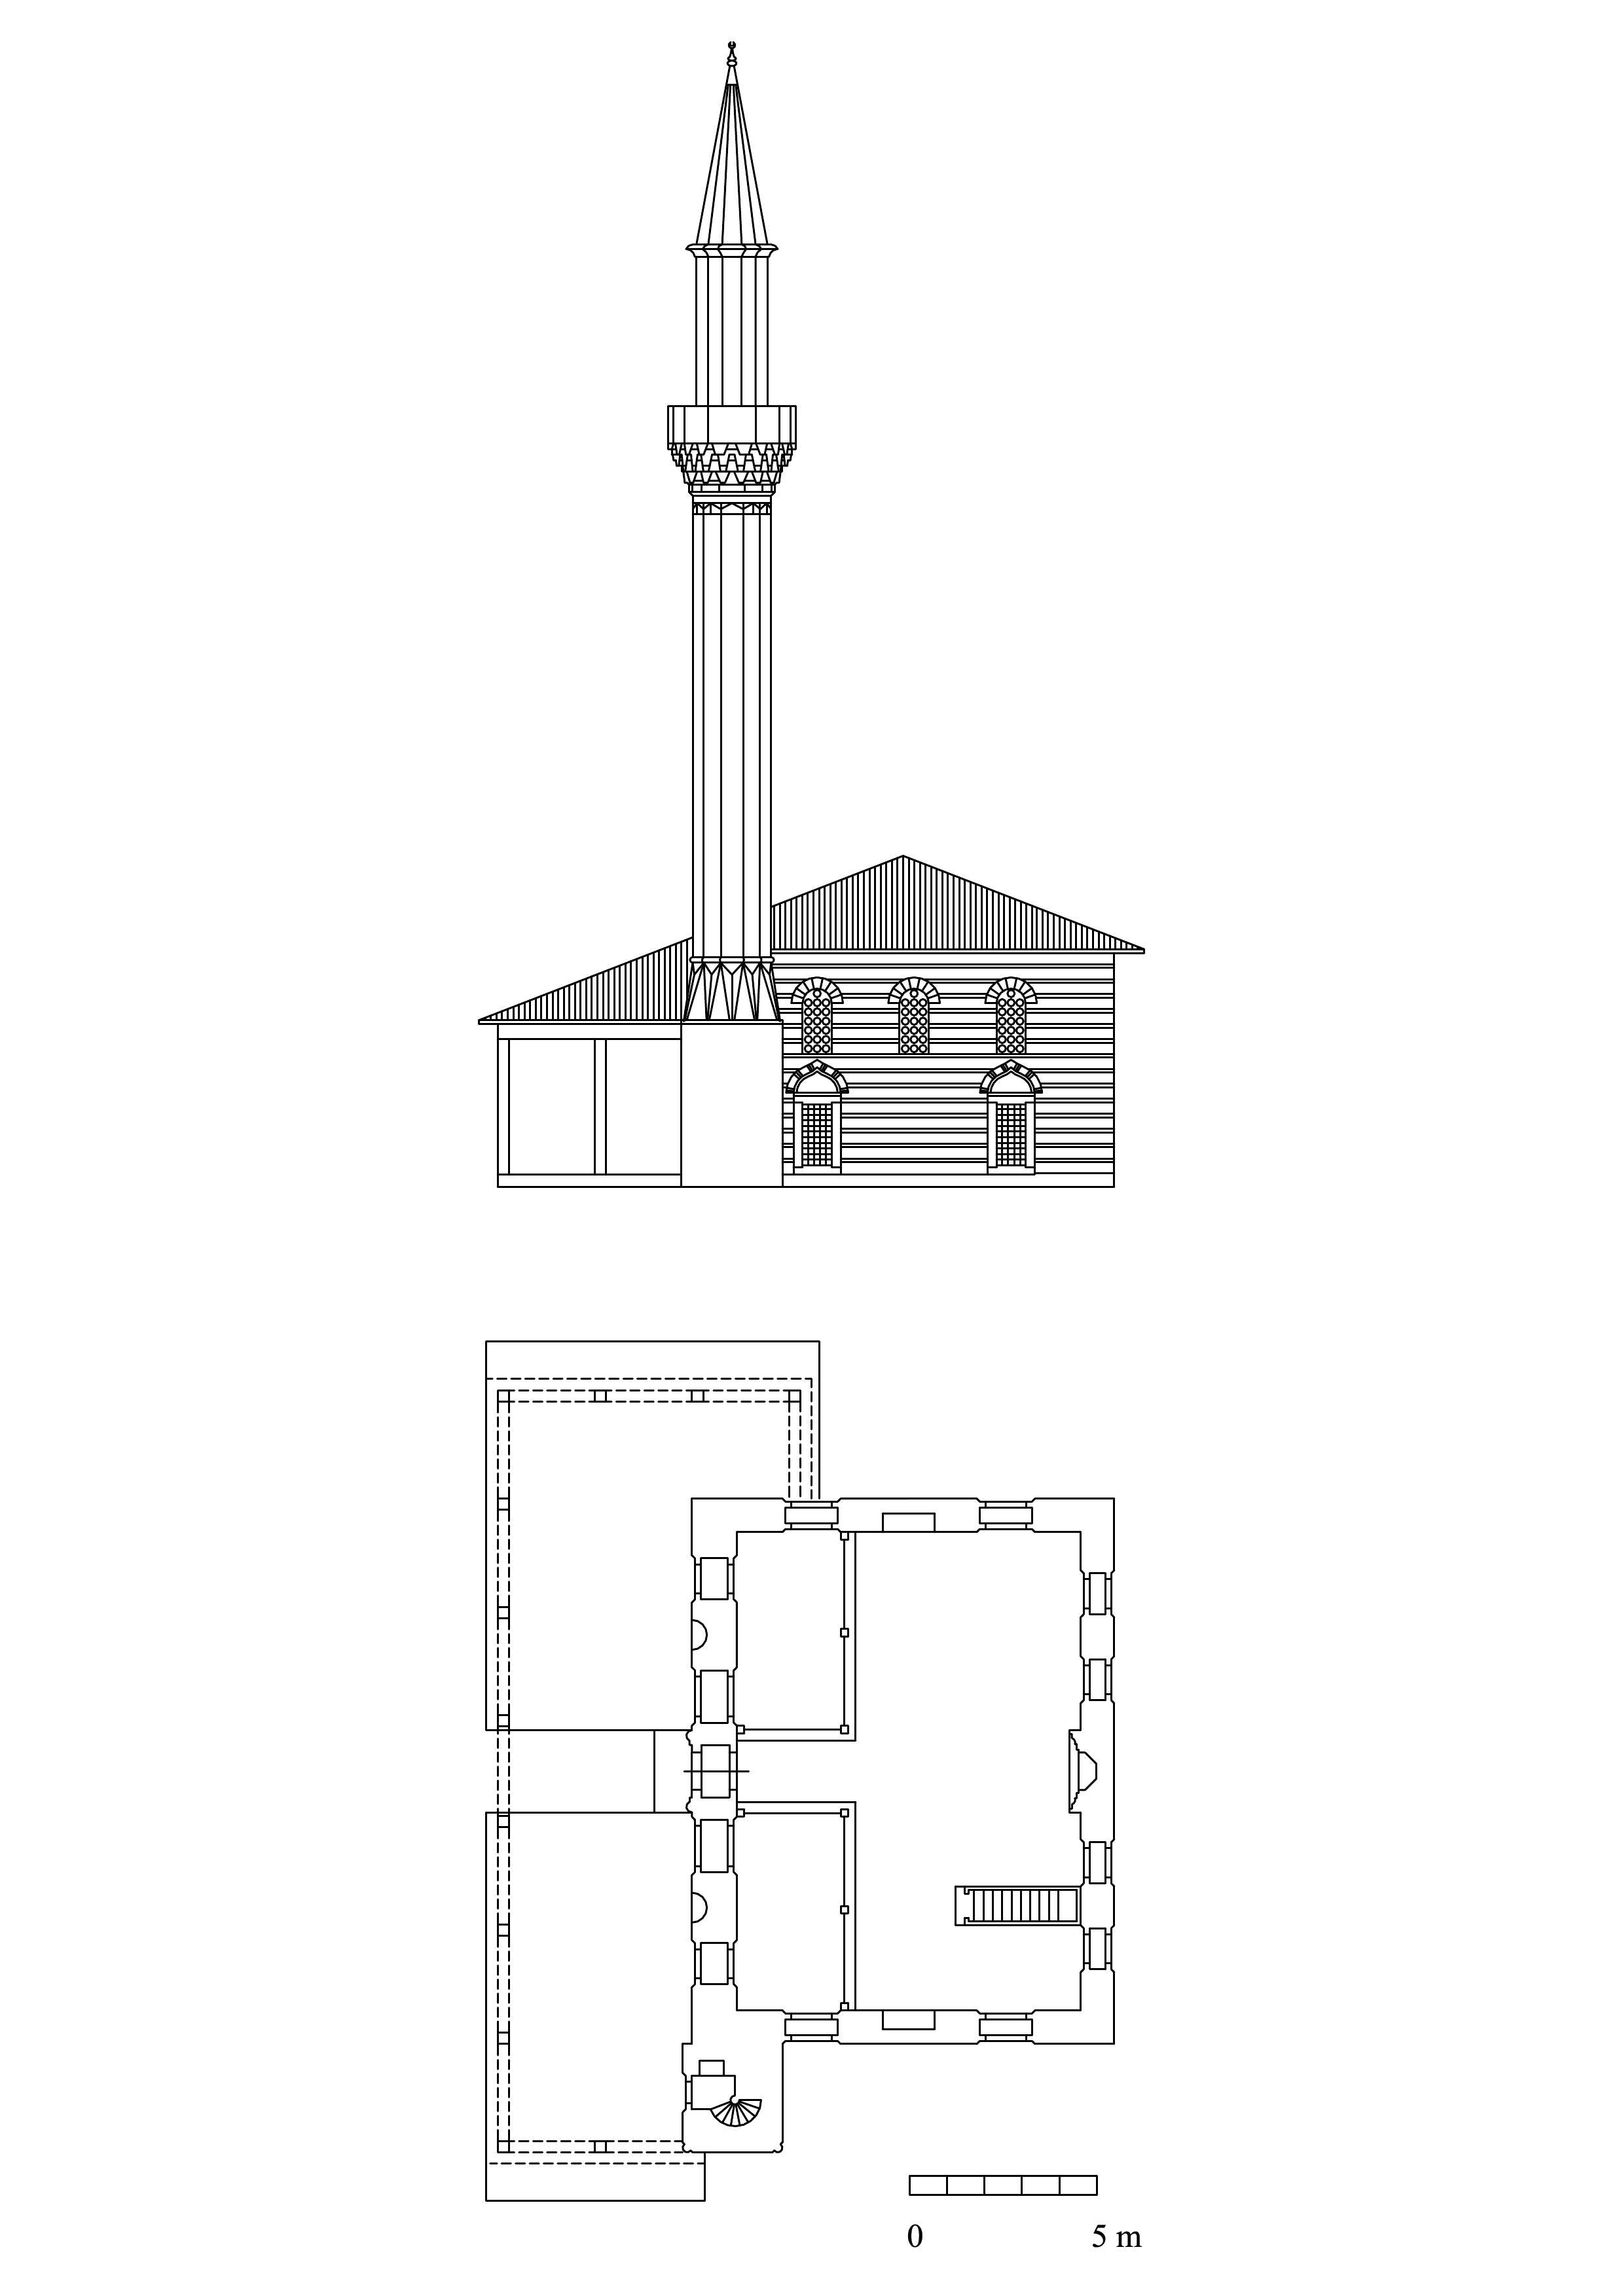 Hacı Evhad Cami - Floor plan and elevation with hypothetical reconstruction of portico